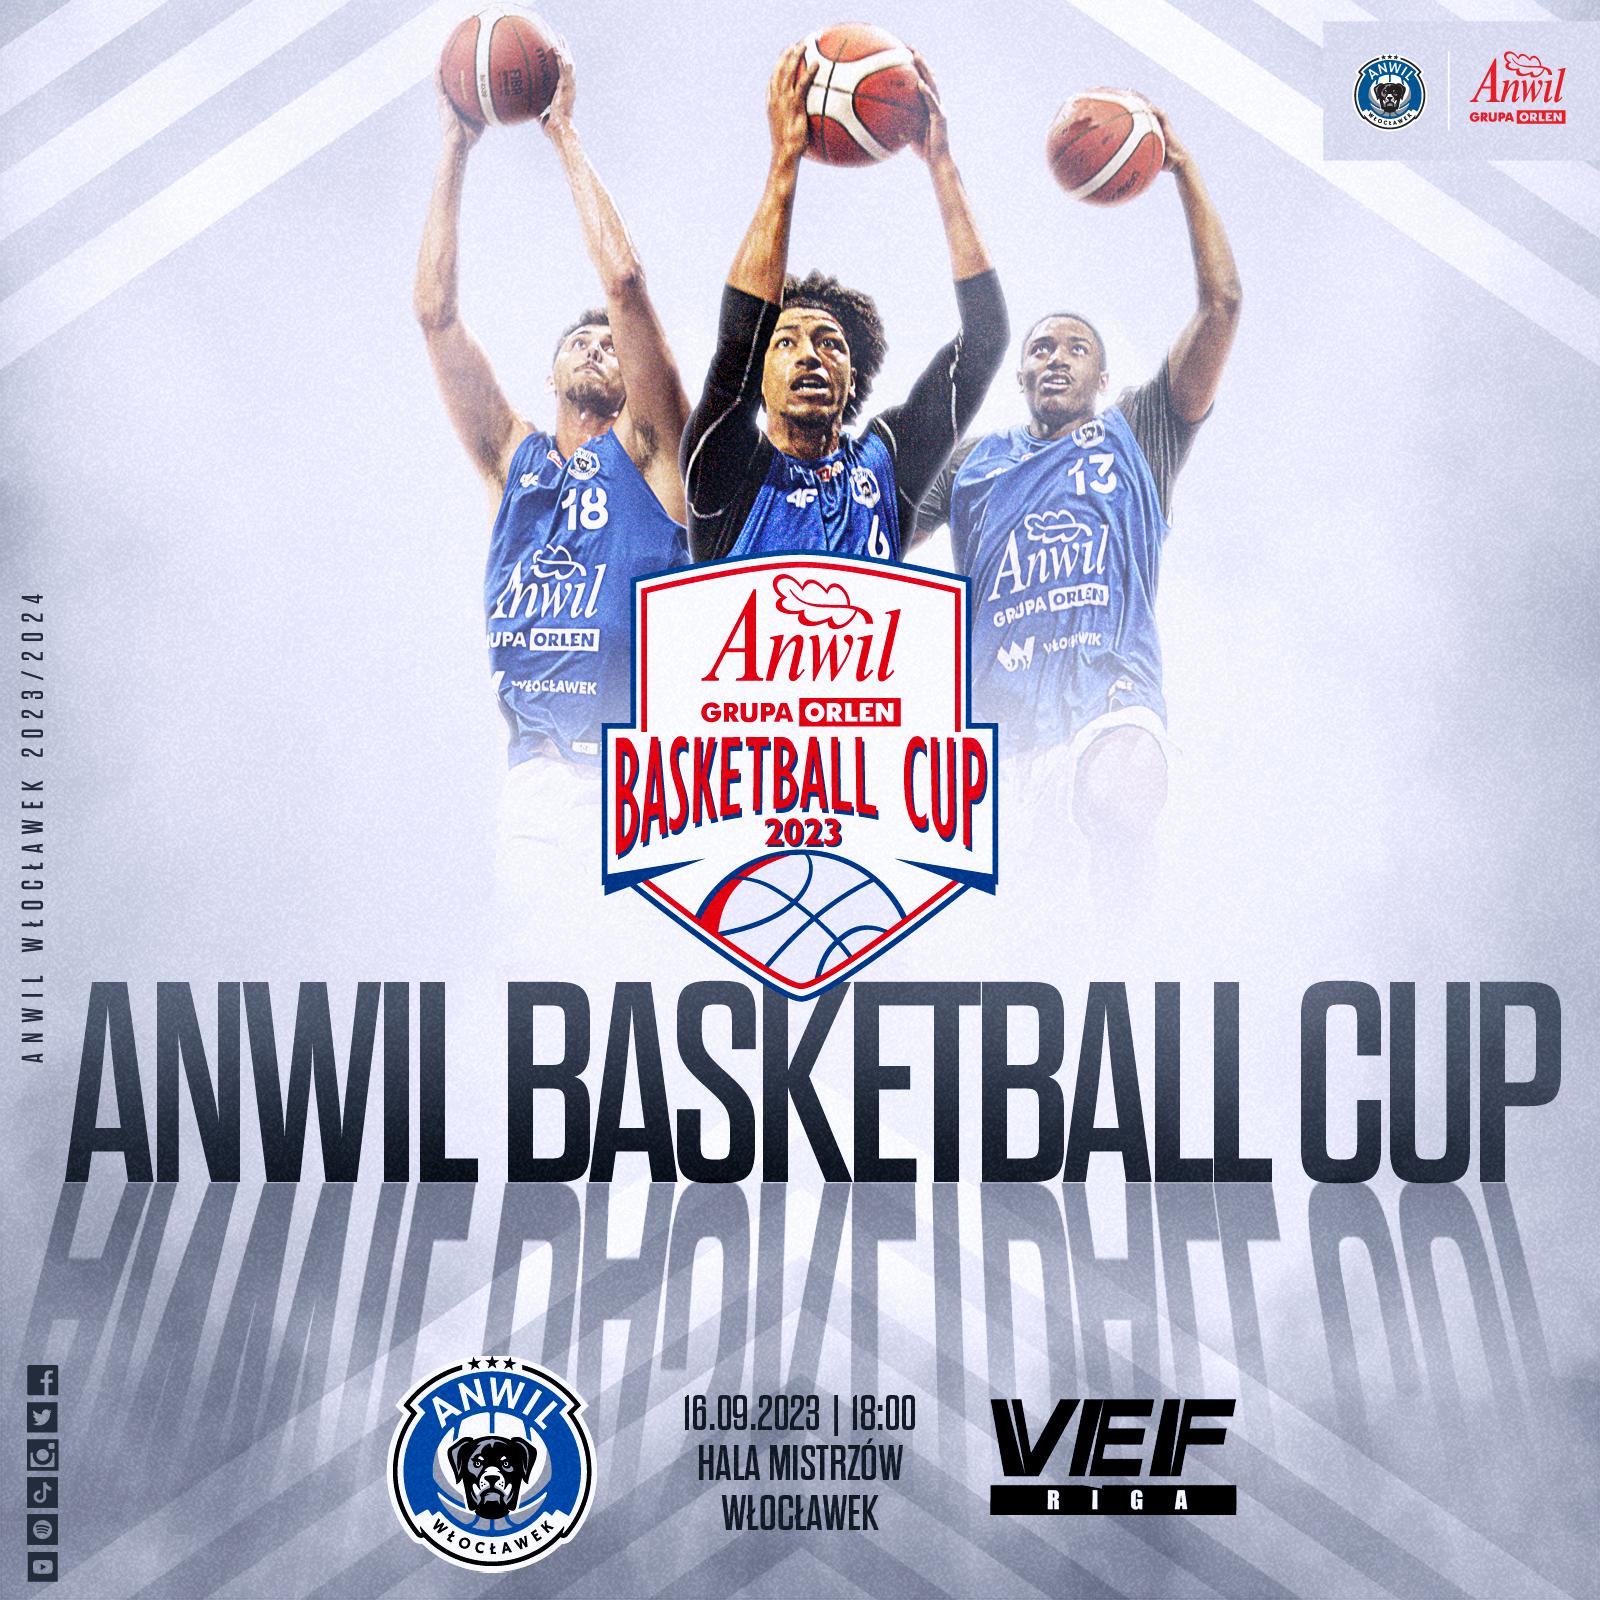 ANWIL Basketball Cup już w sobotę